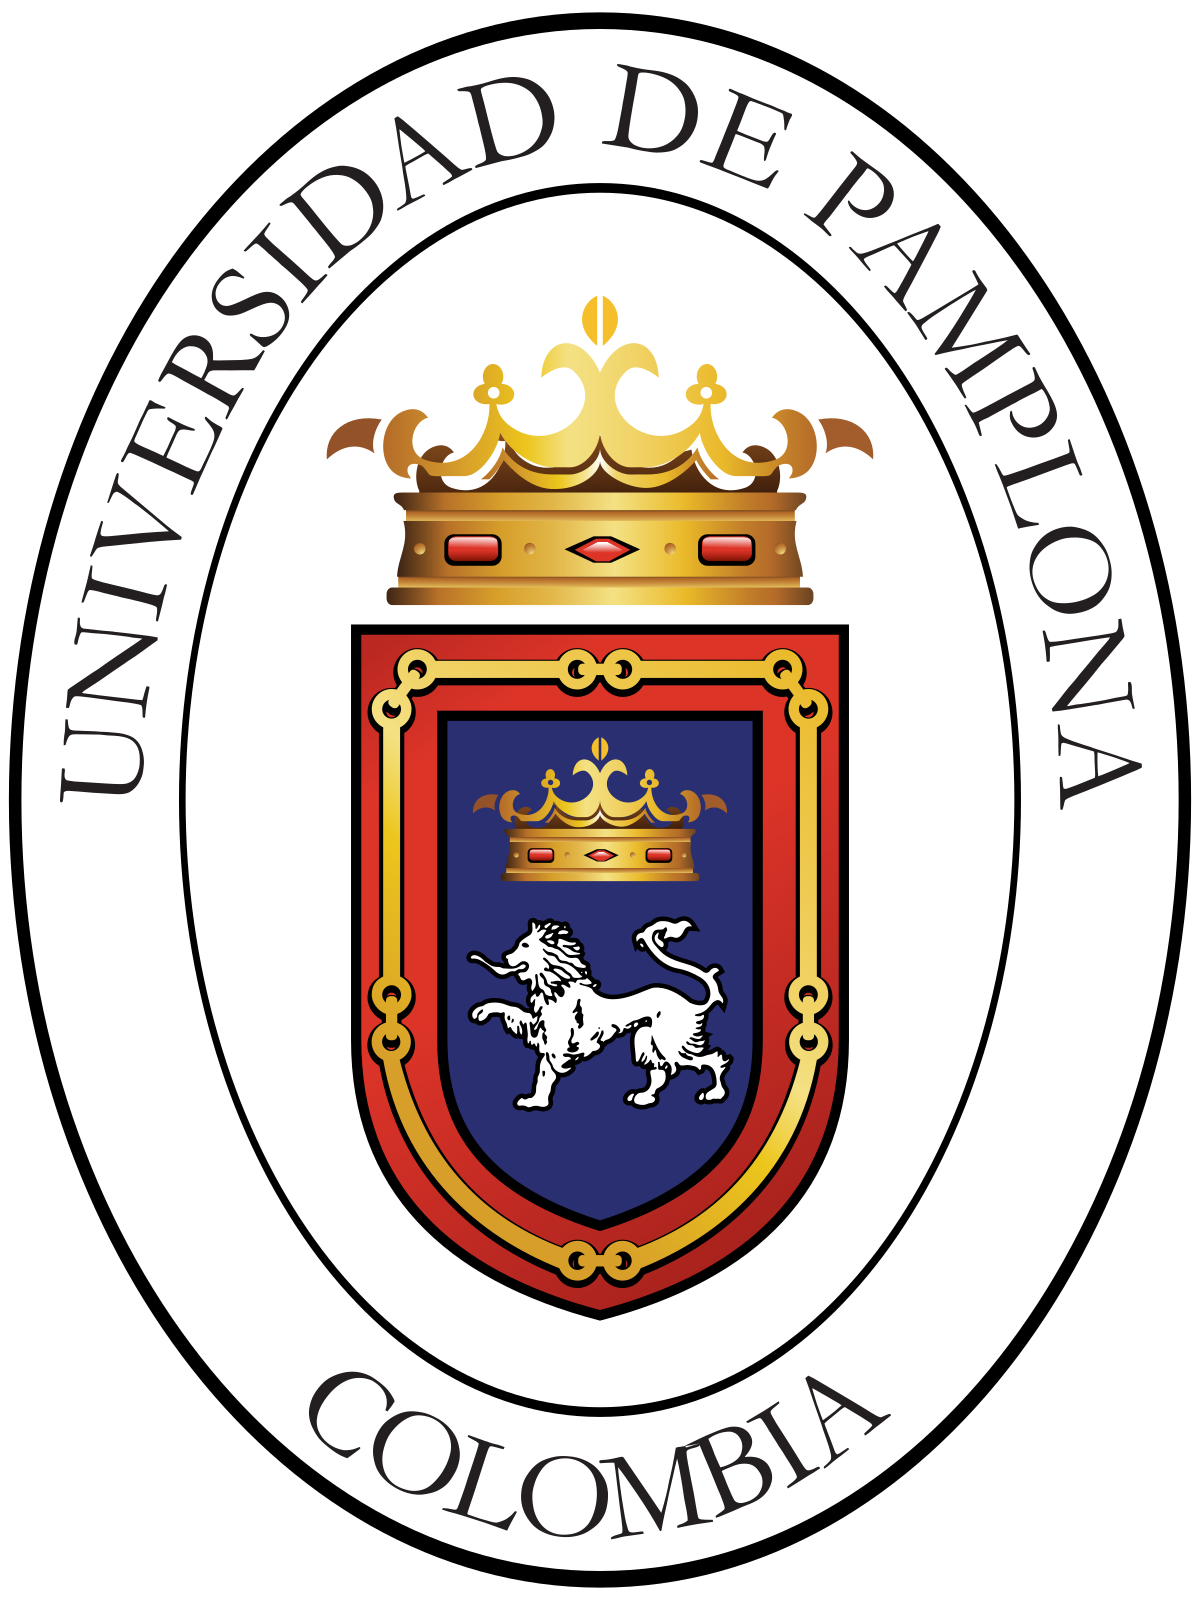 University of Pamplona logo